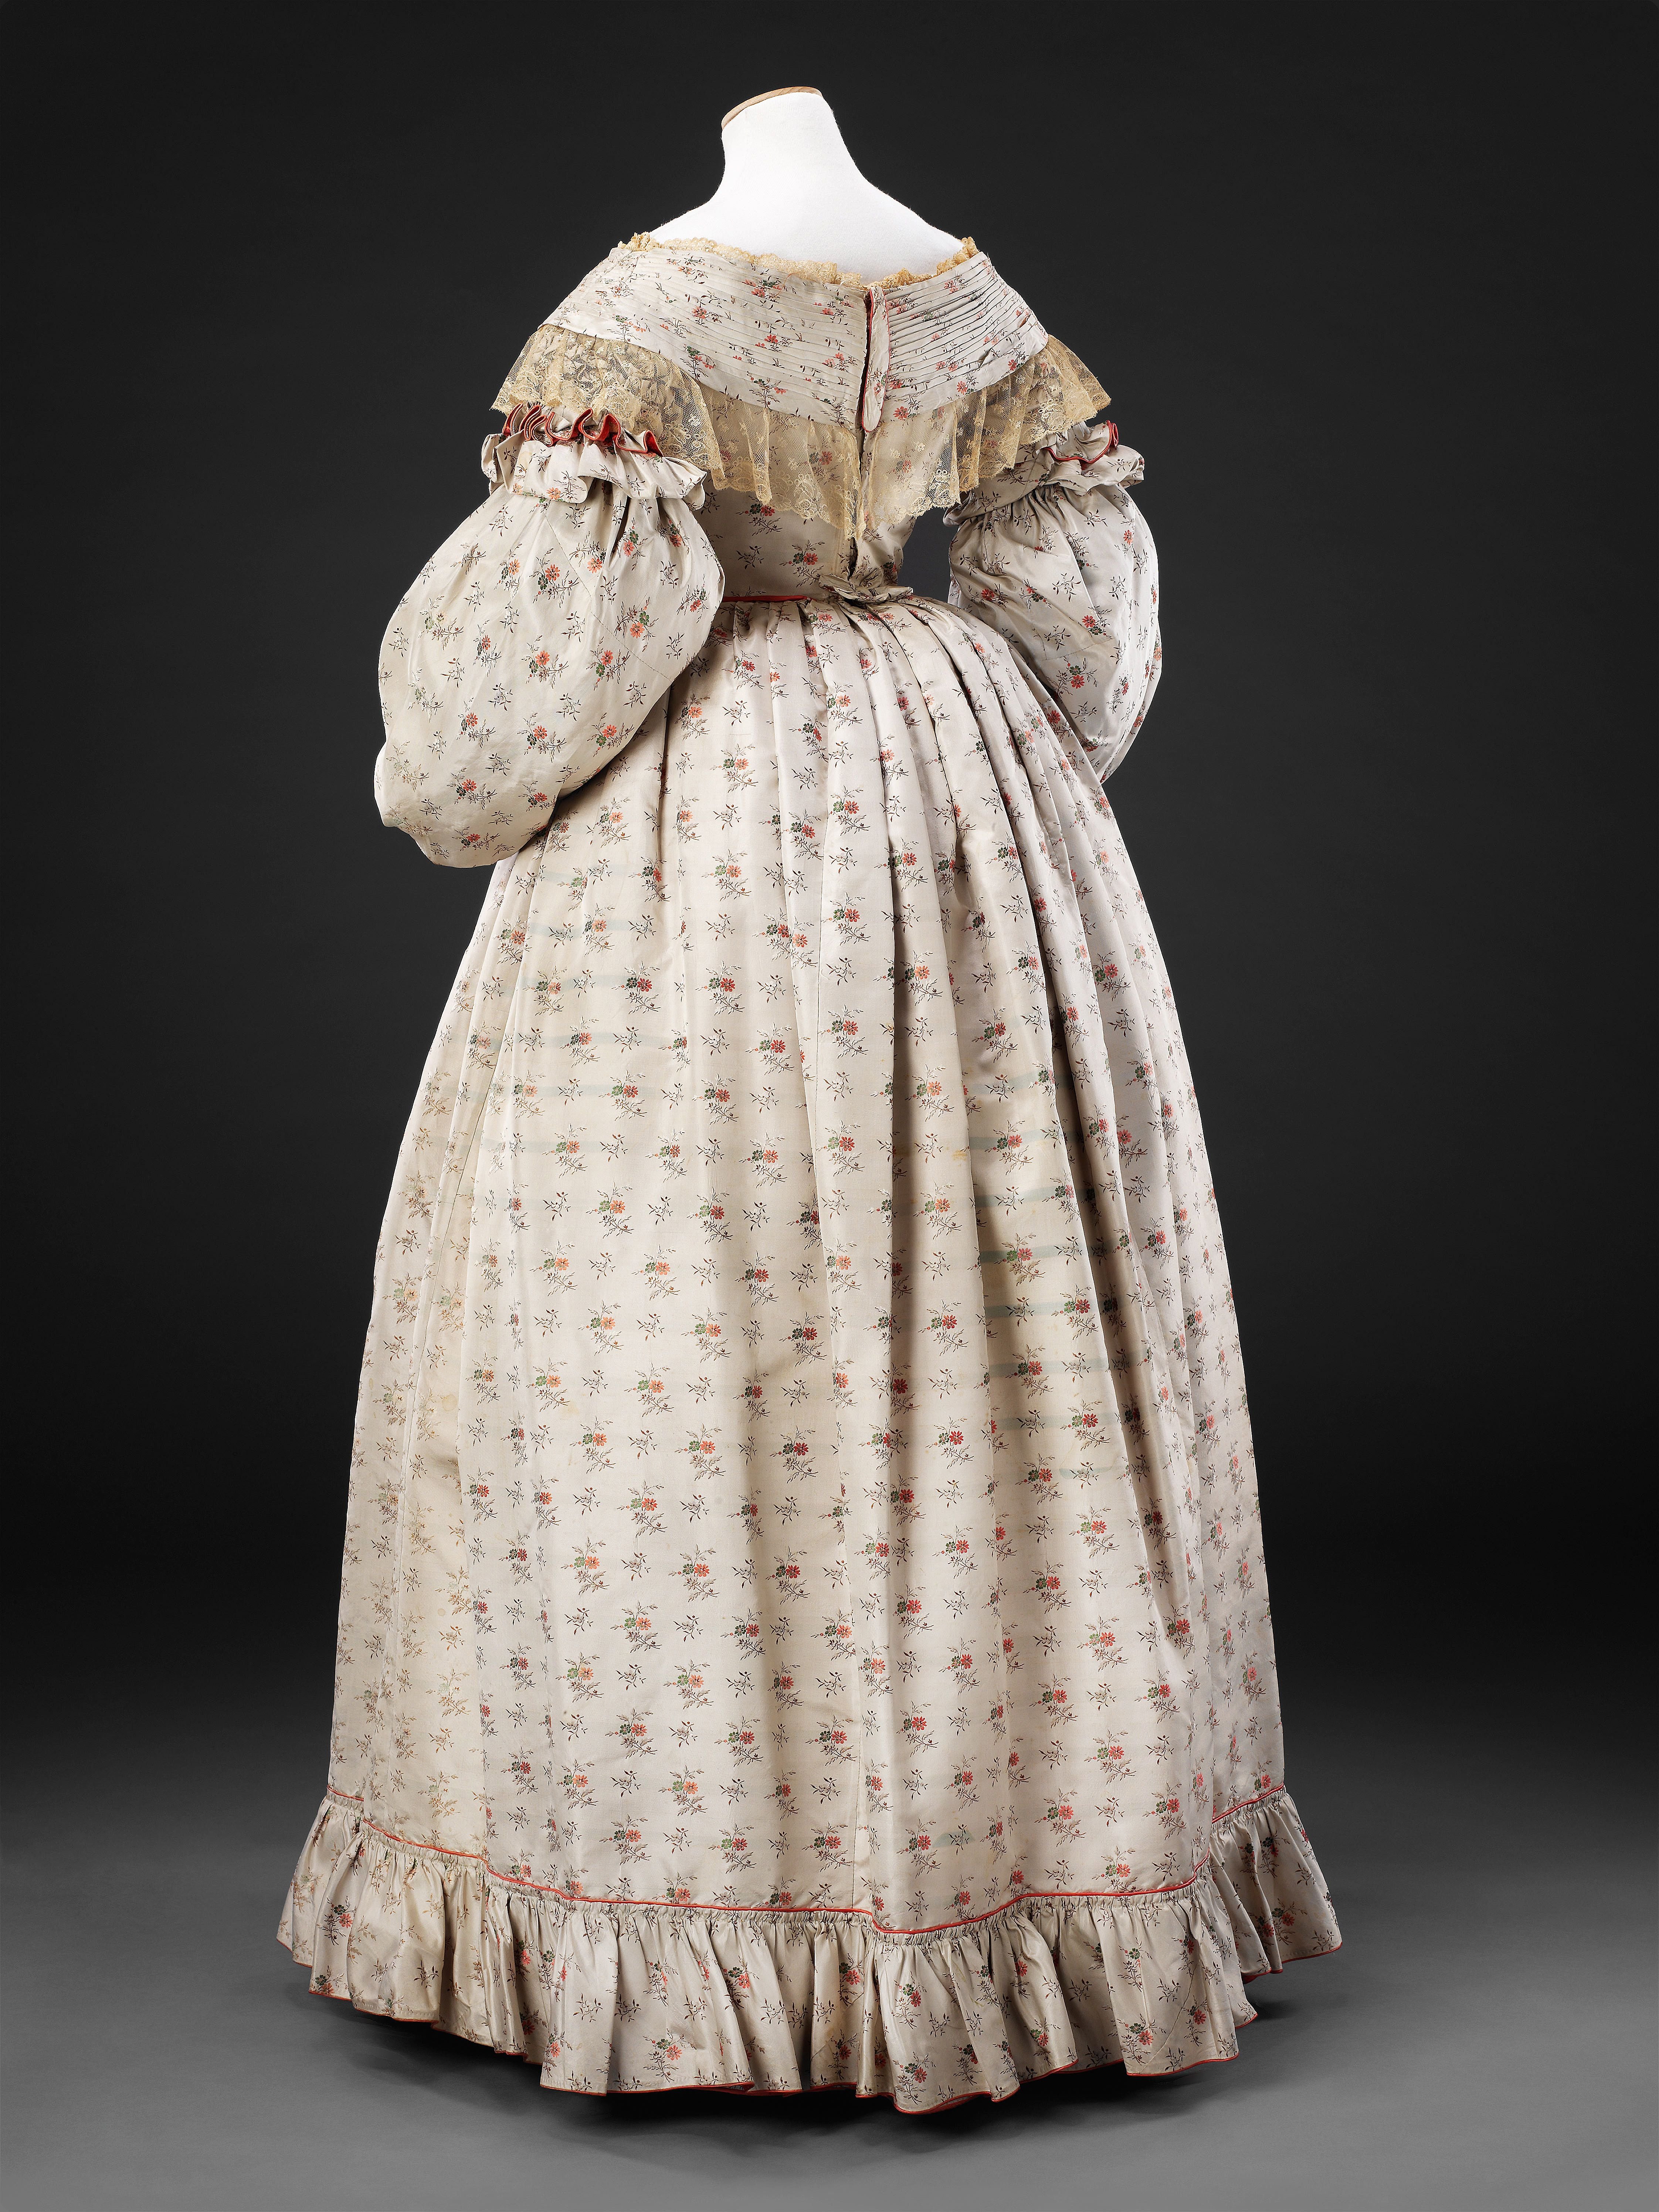 Одежда 1800. Victorian Fashion 1830s. Мода в Англии в 1830. Викторианская мода 1830. Женская мода 19 века в Англии.